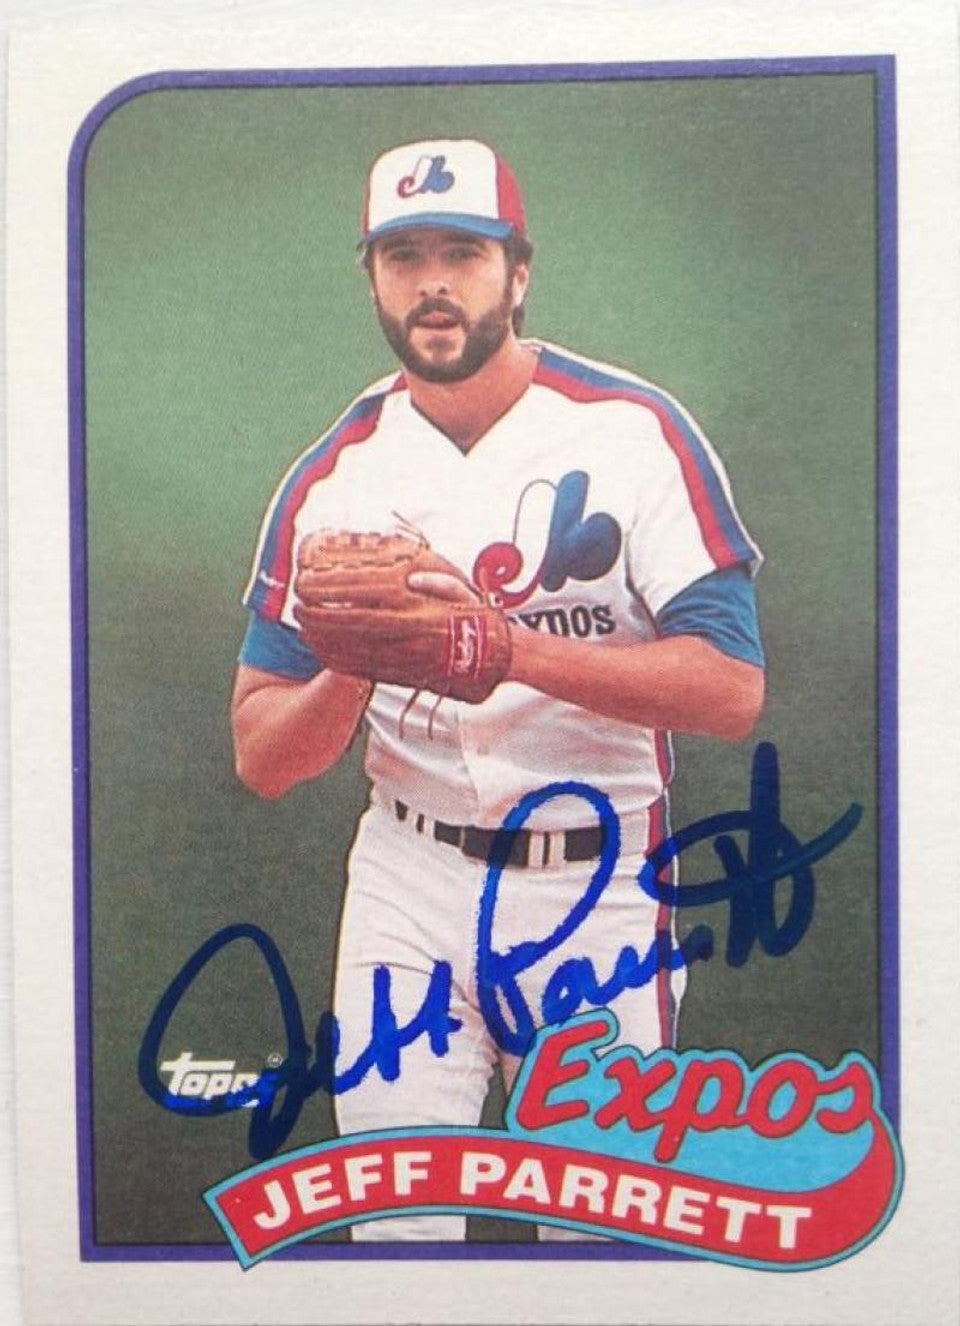 Jeff Parrett Signed 1989 Topps Baseball Card - Montreal Expos